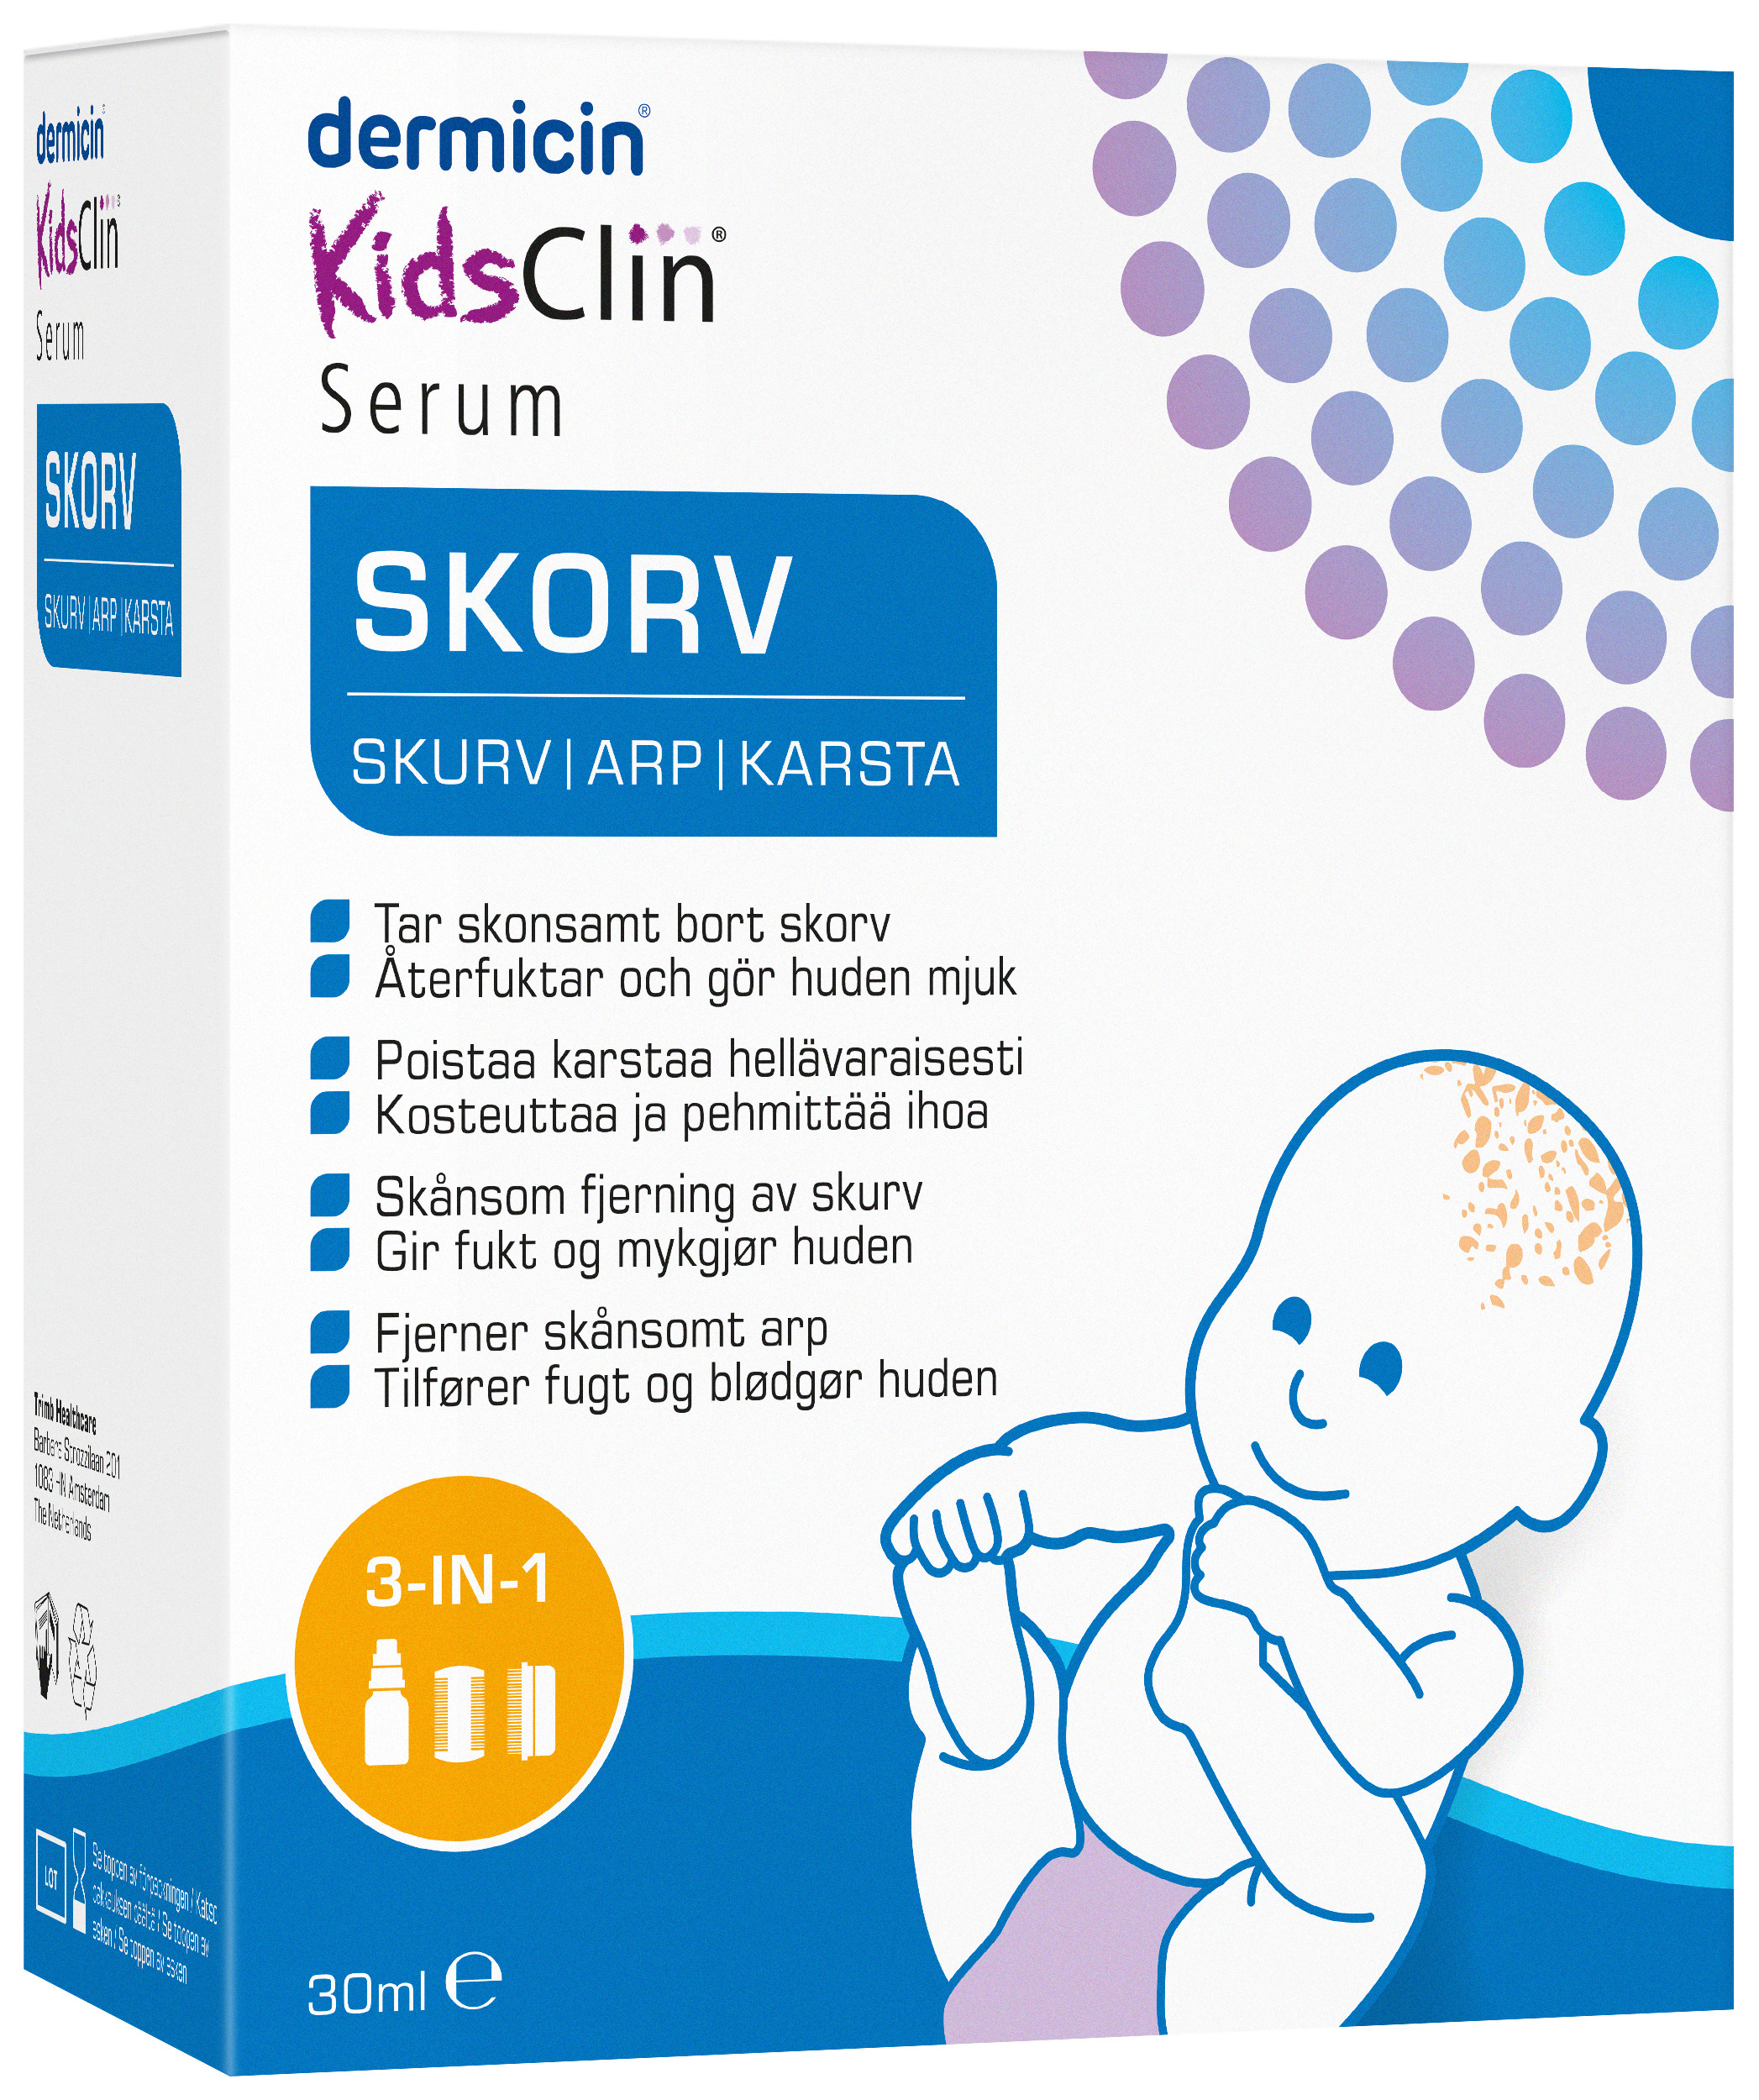 KidsClin Skorv Serum Kit 30 ml